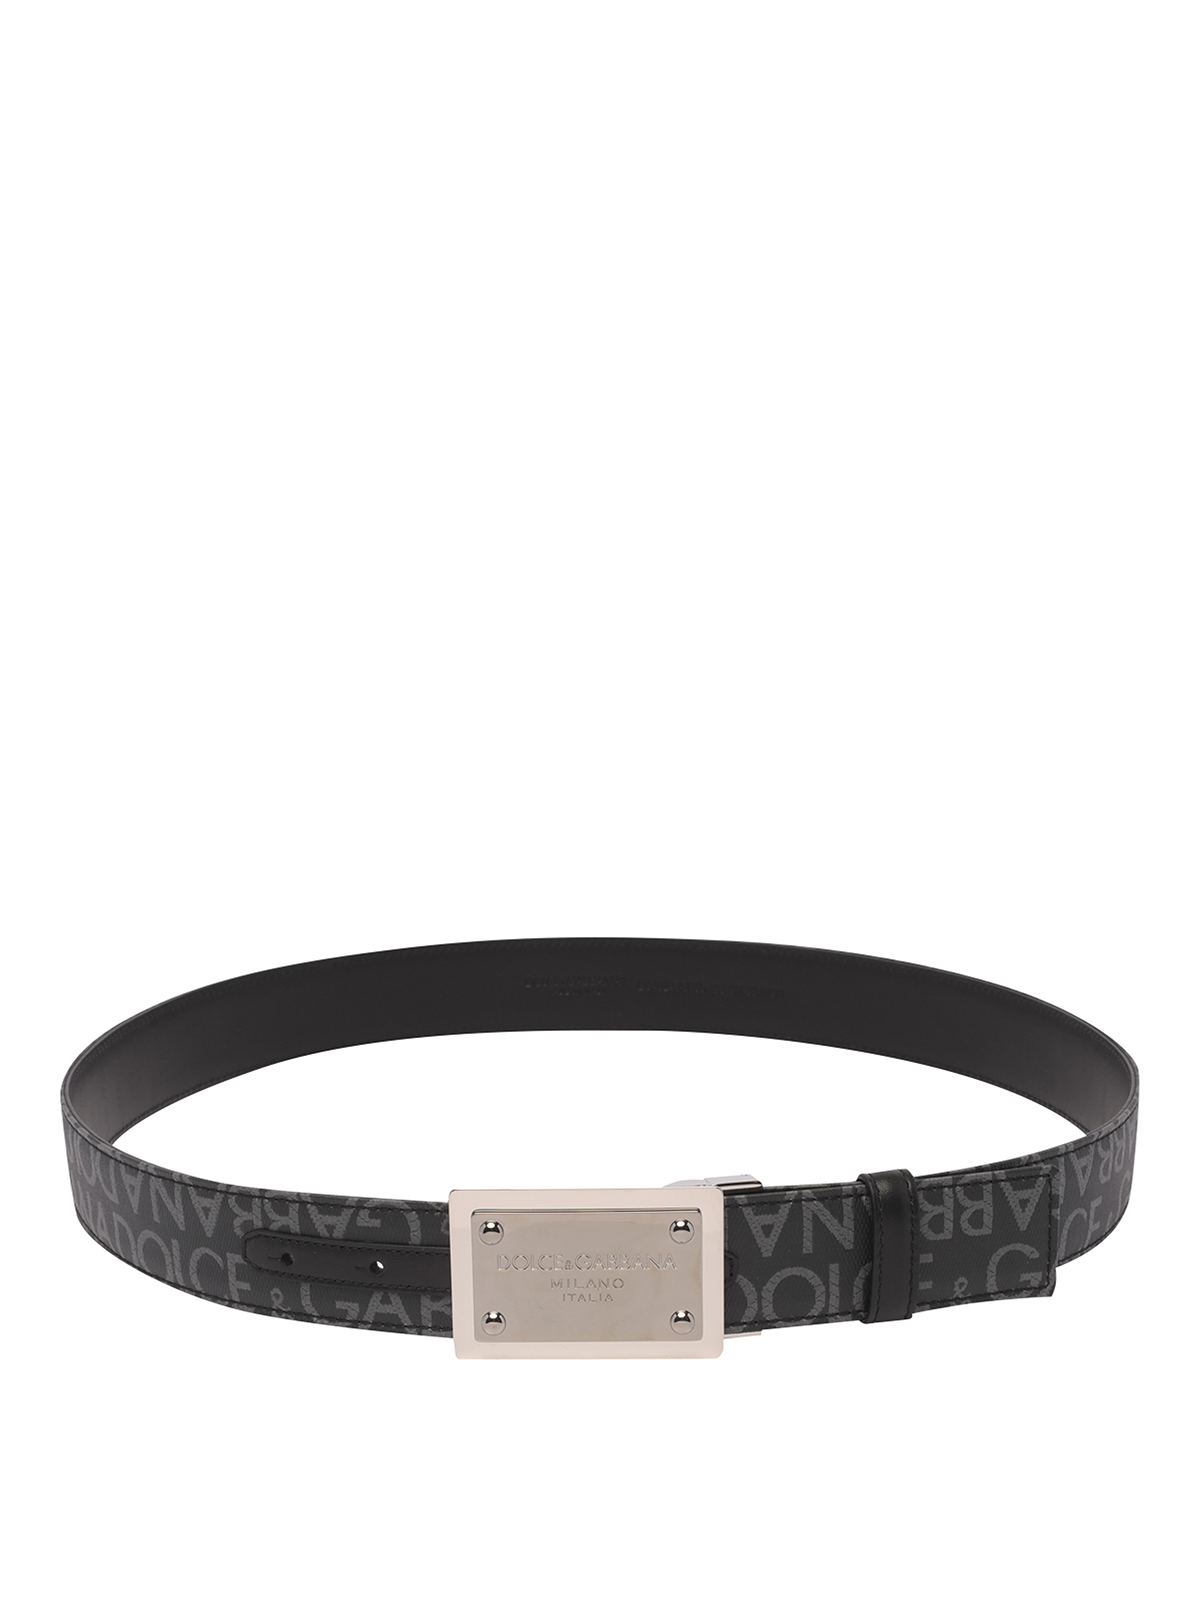 Dolce & Gabbana Reversible Logo Belt In Black